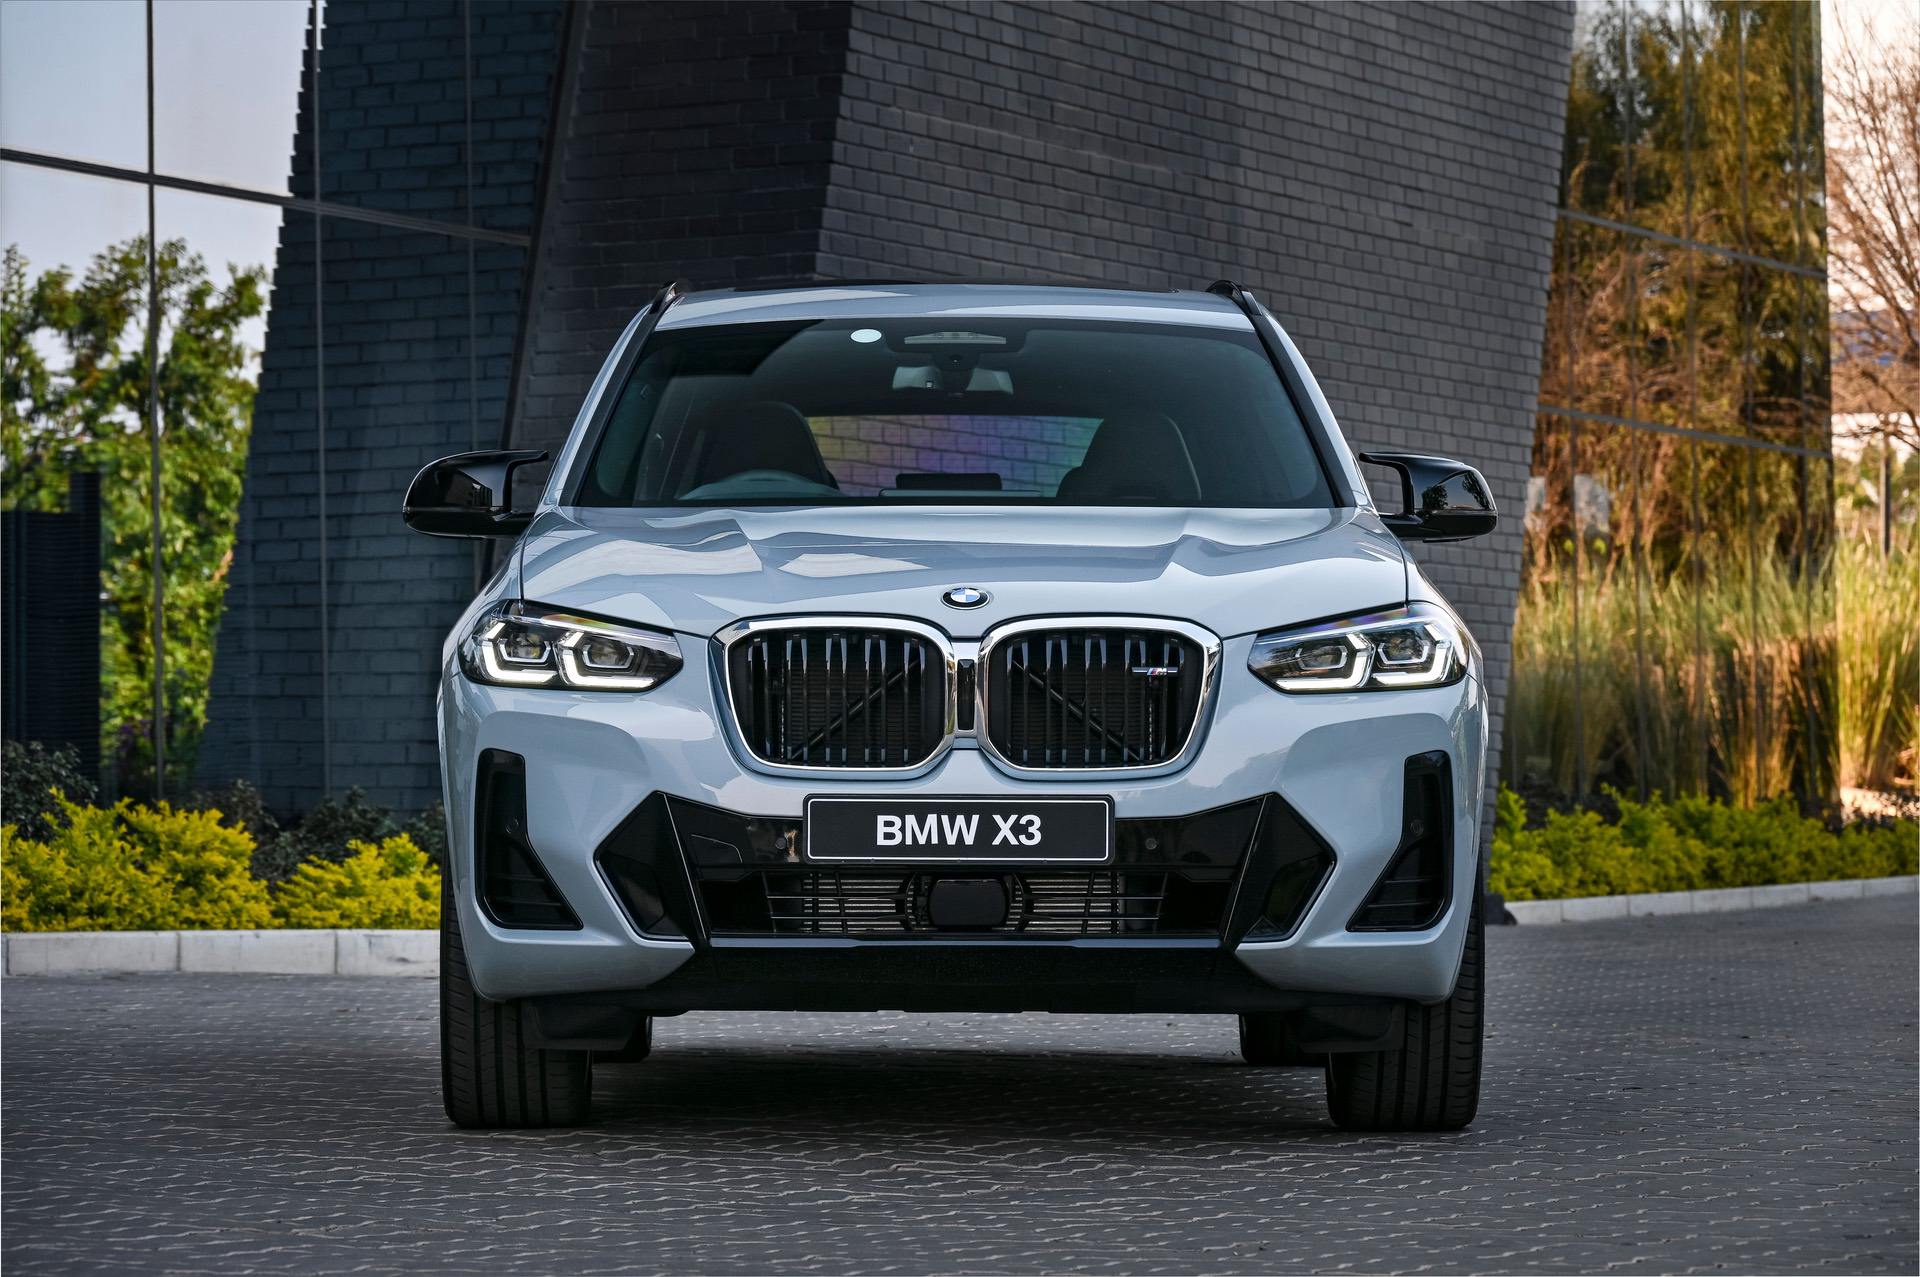 BMWBLOG - The Latest BMW News